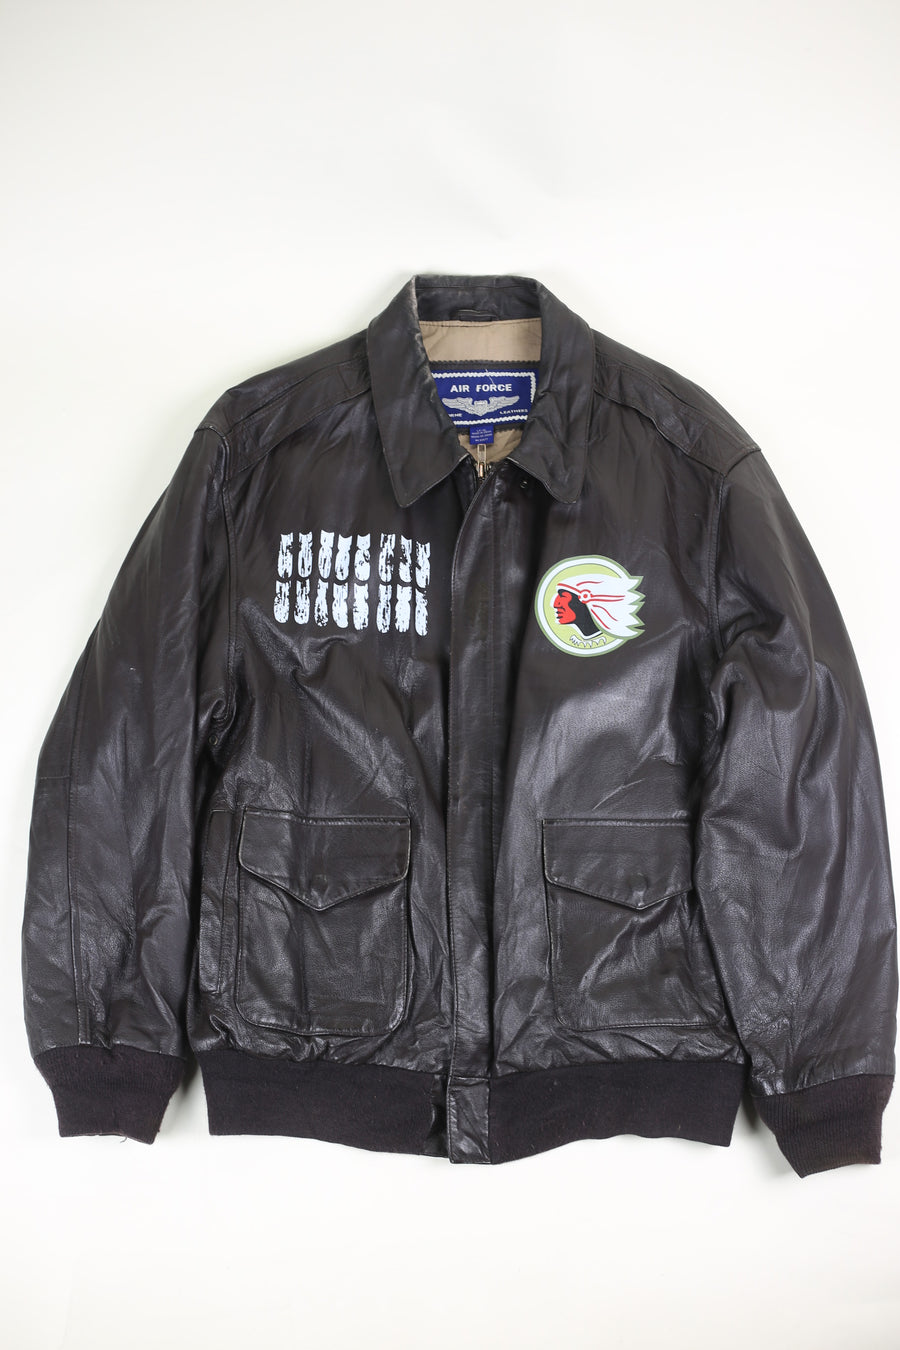 A2 Air Apache Leather Jacket - L -